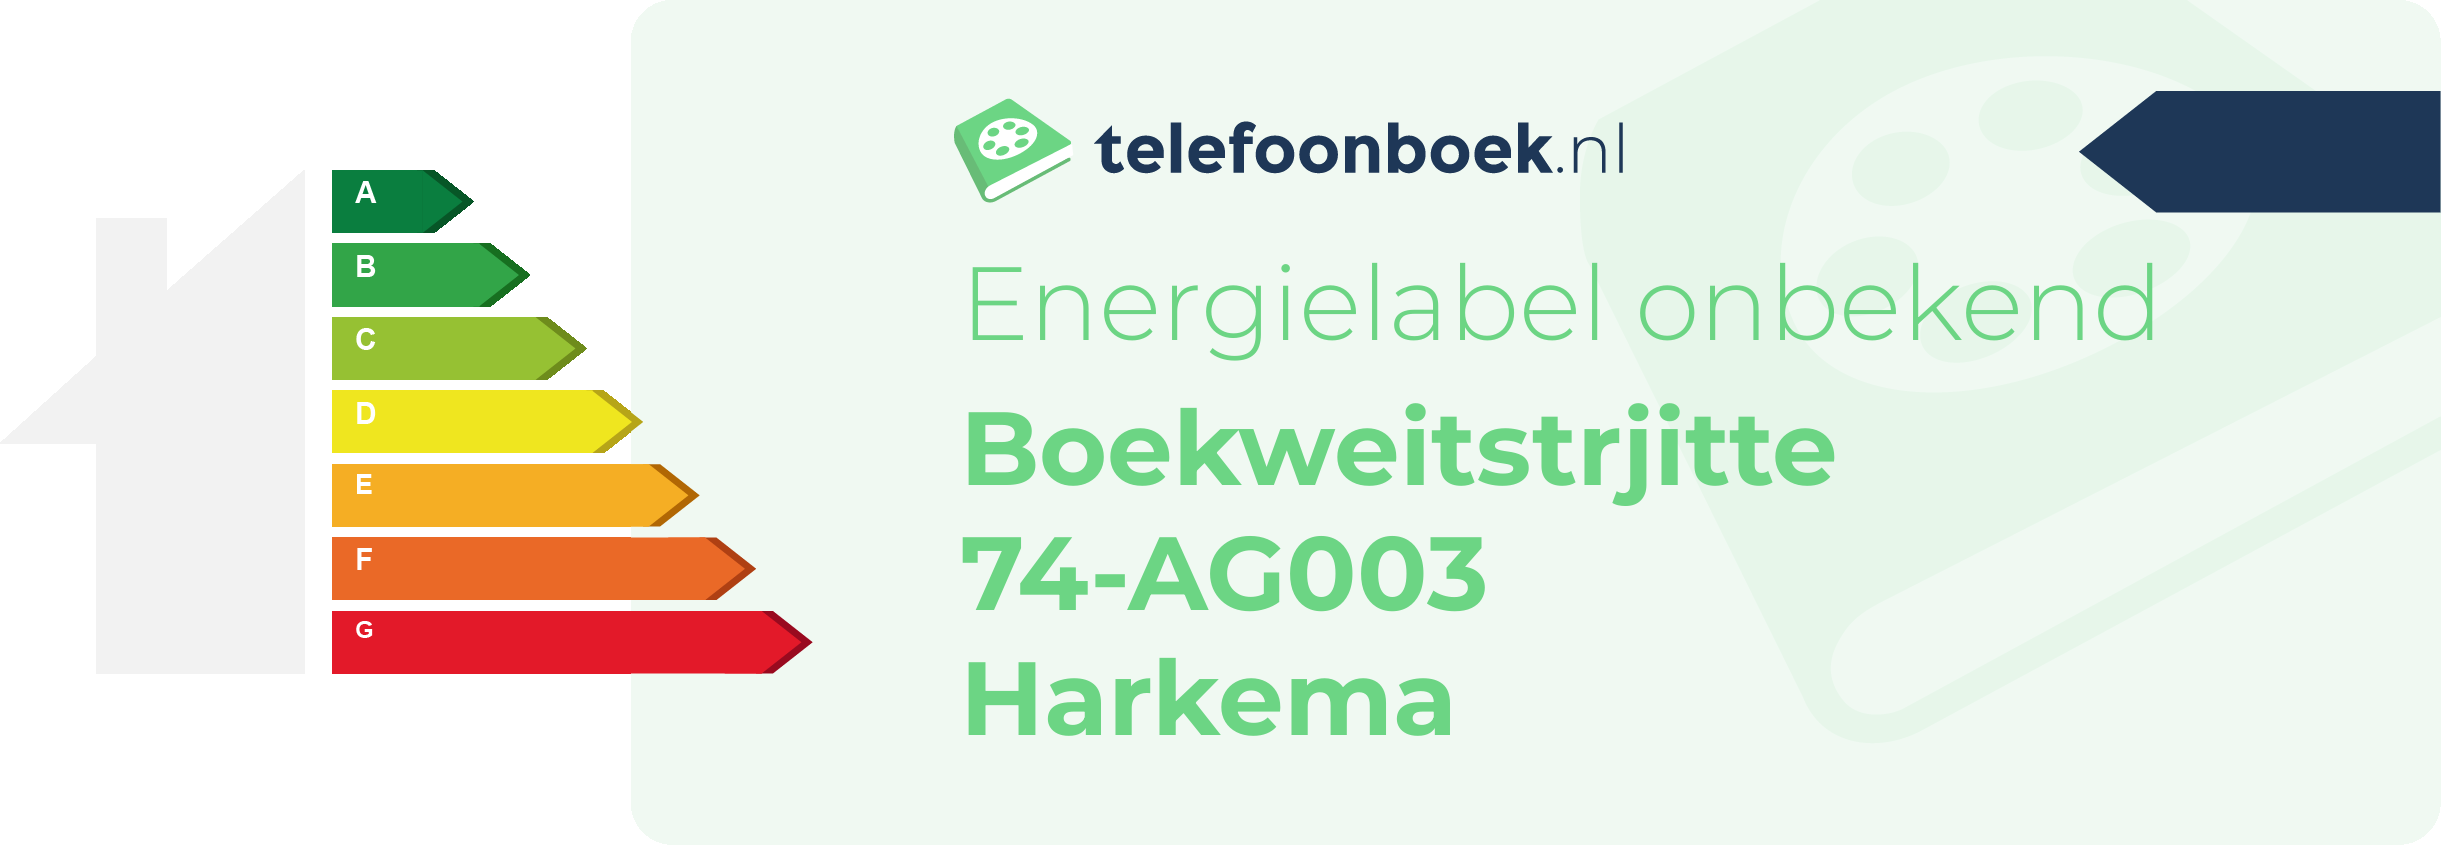 Energielabel Boekweitstrjitte 74-AG003 Harkema